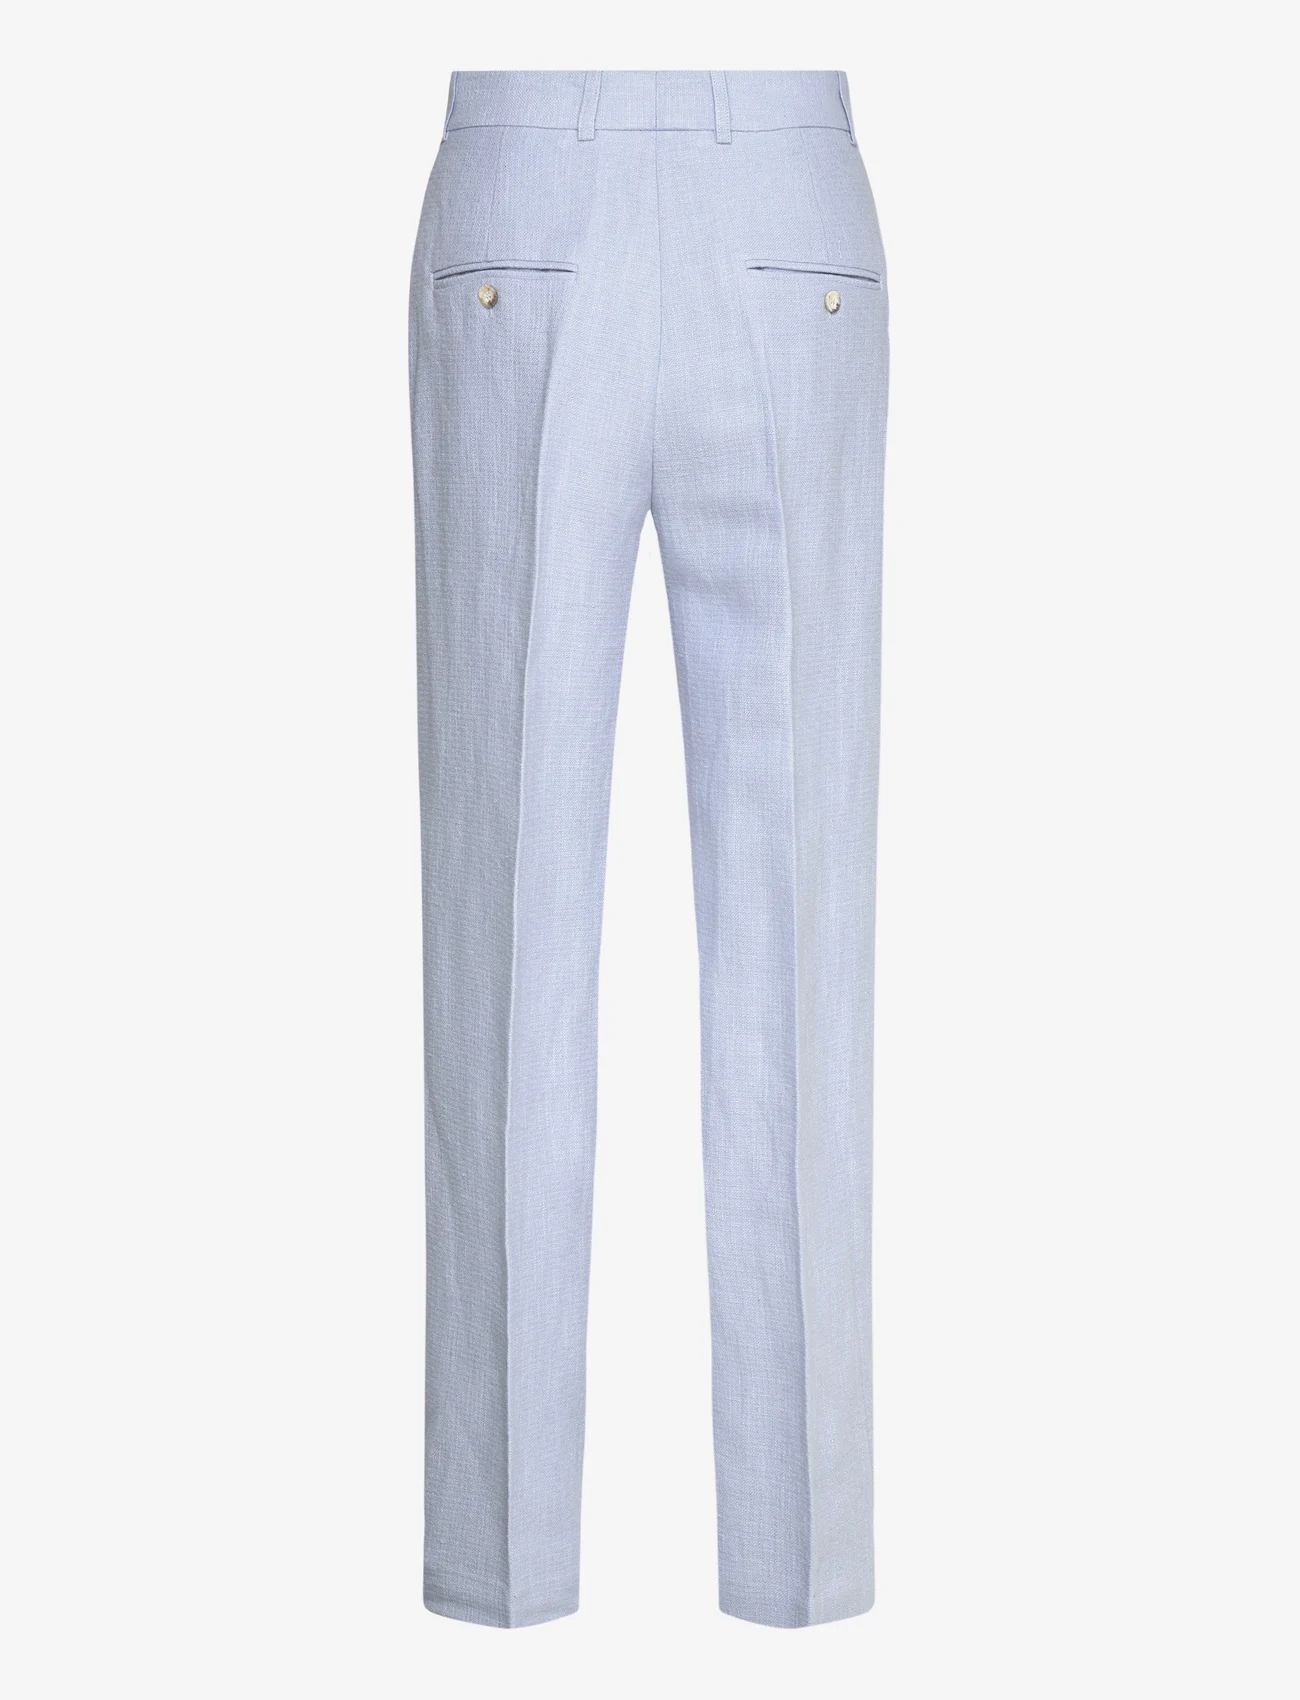 House Of Dagmar - Slim suit pant - tailored trousers - celeste - 1